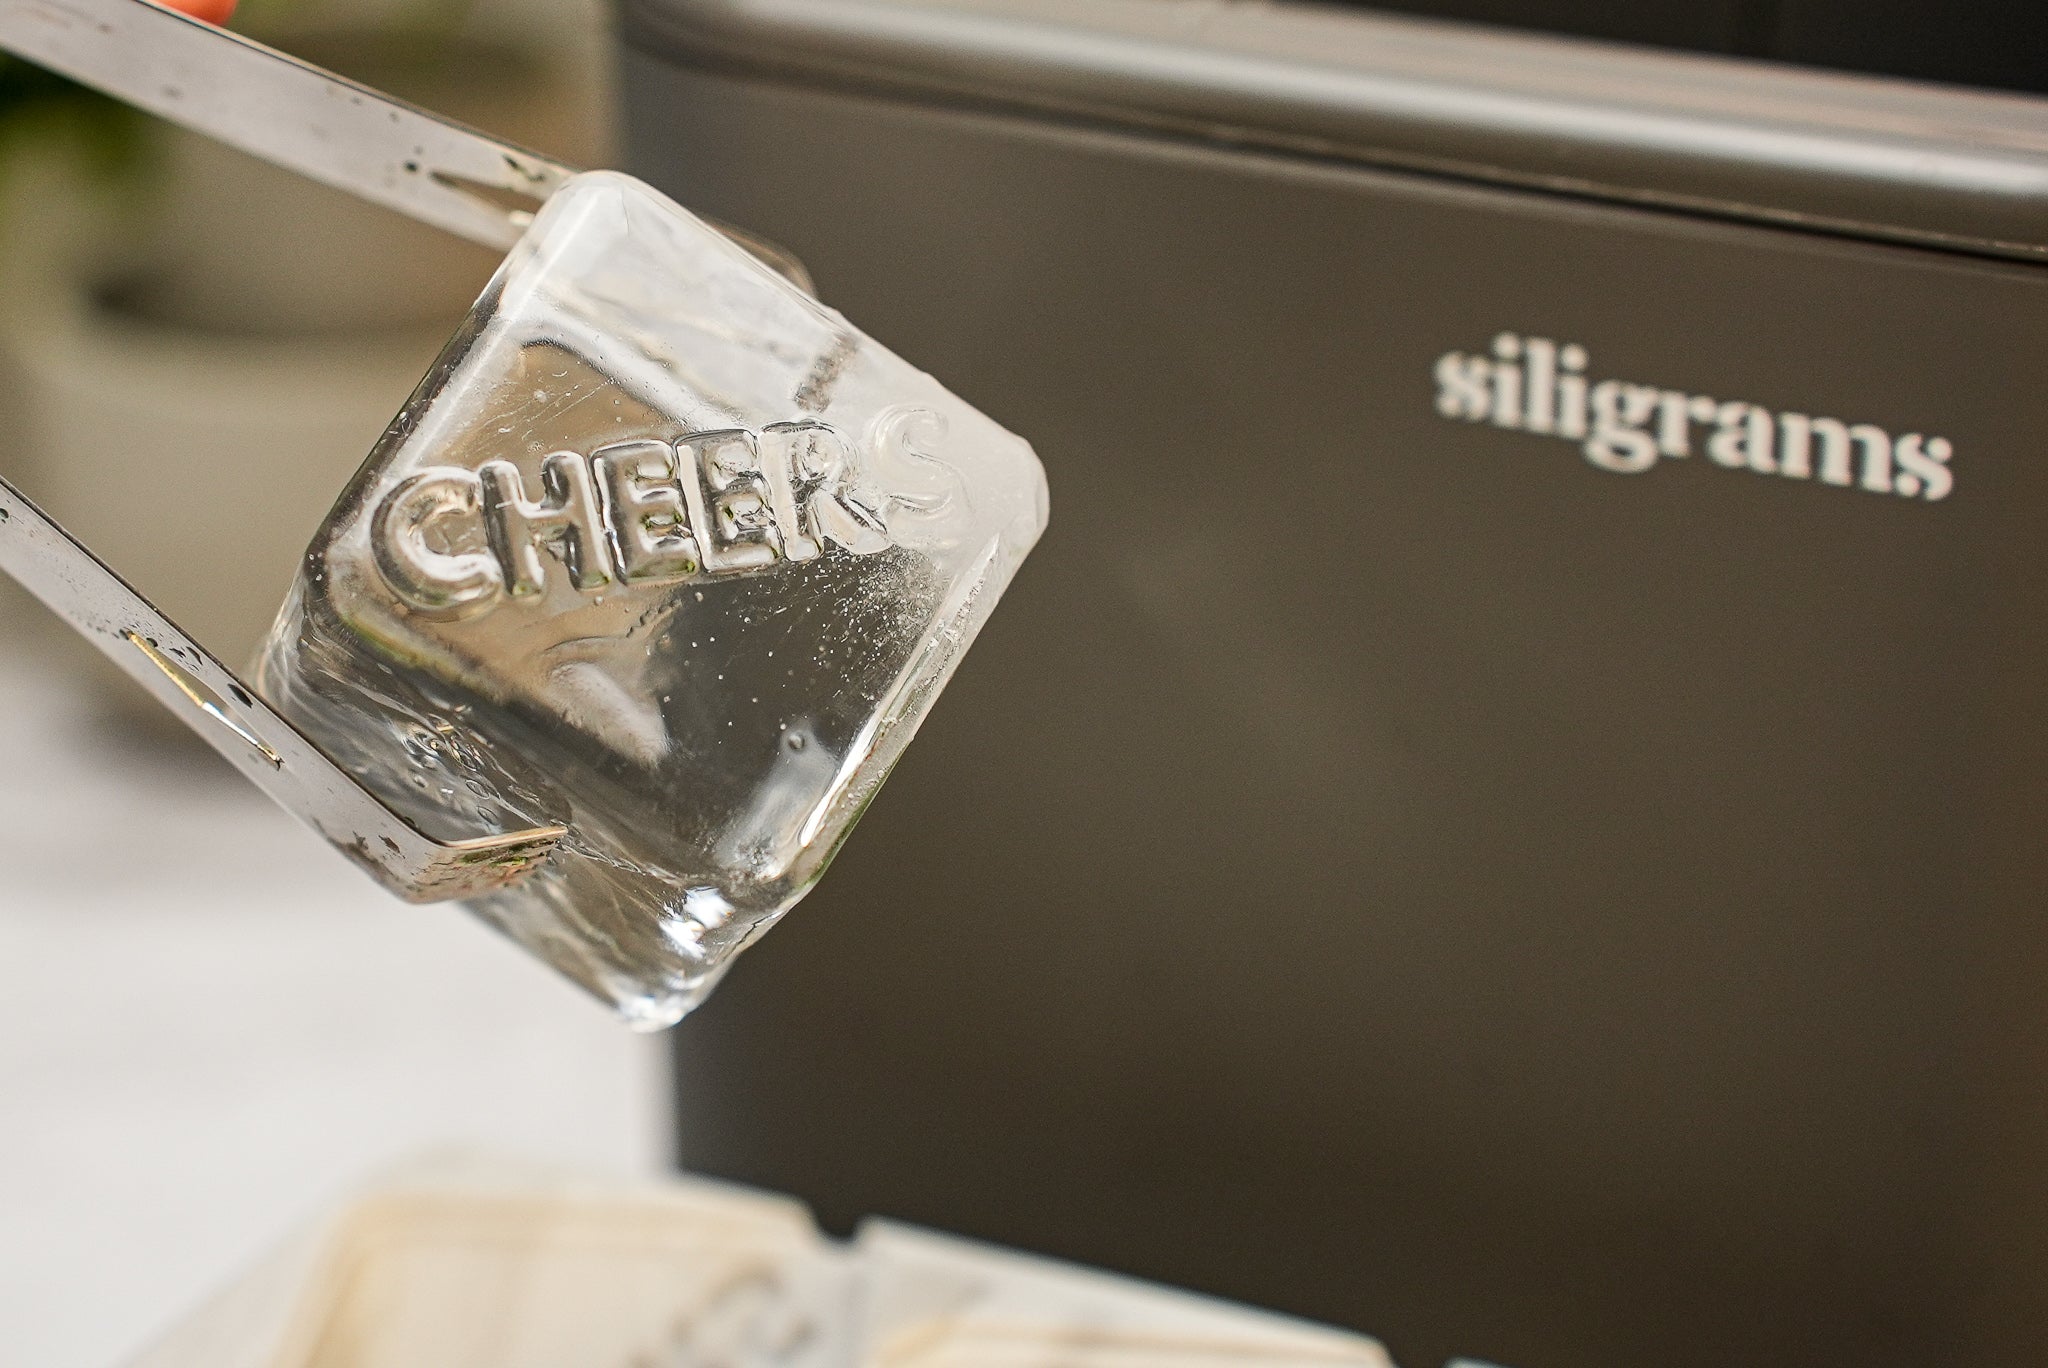 Original Siligrams Customizable Clear Ice Maker